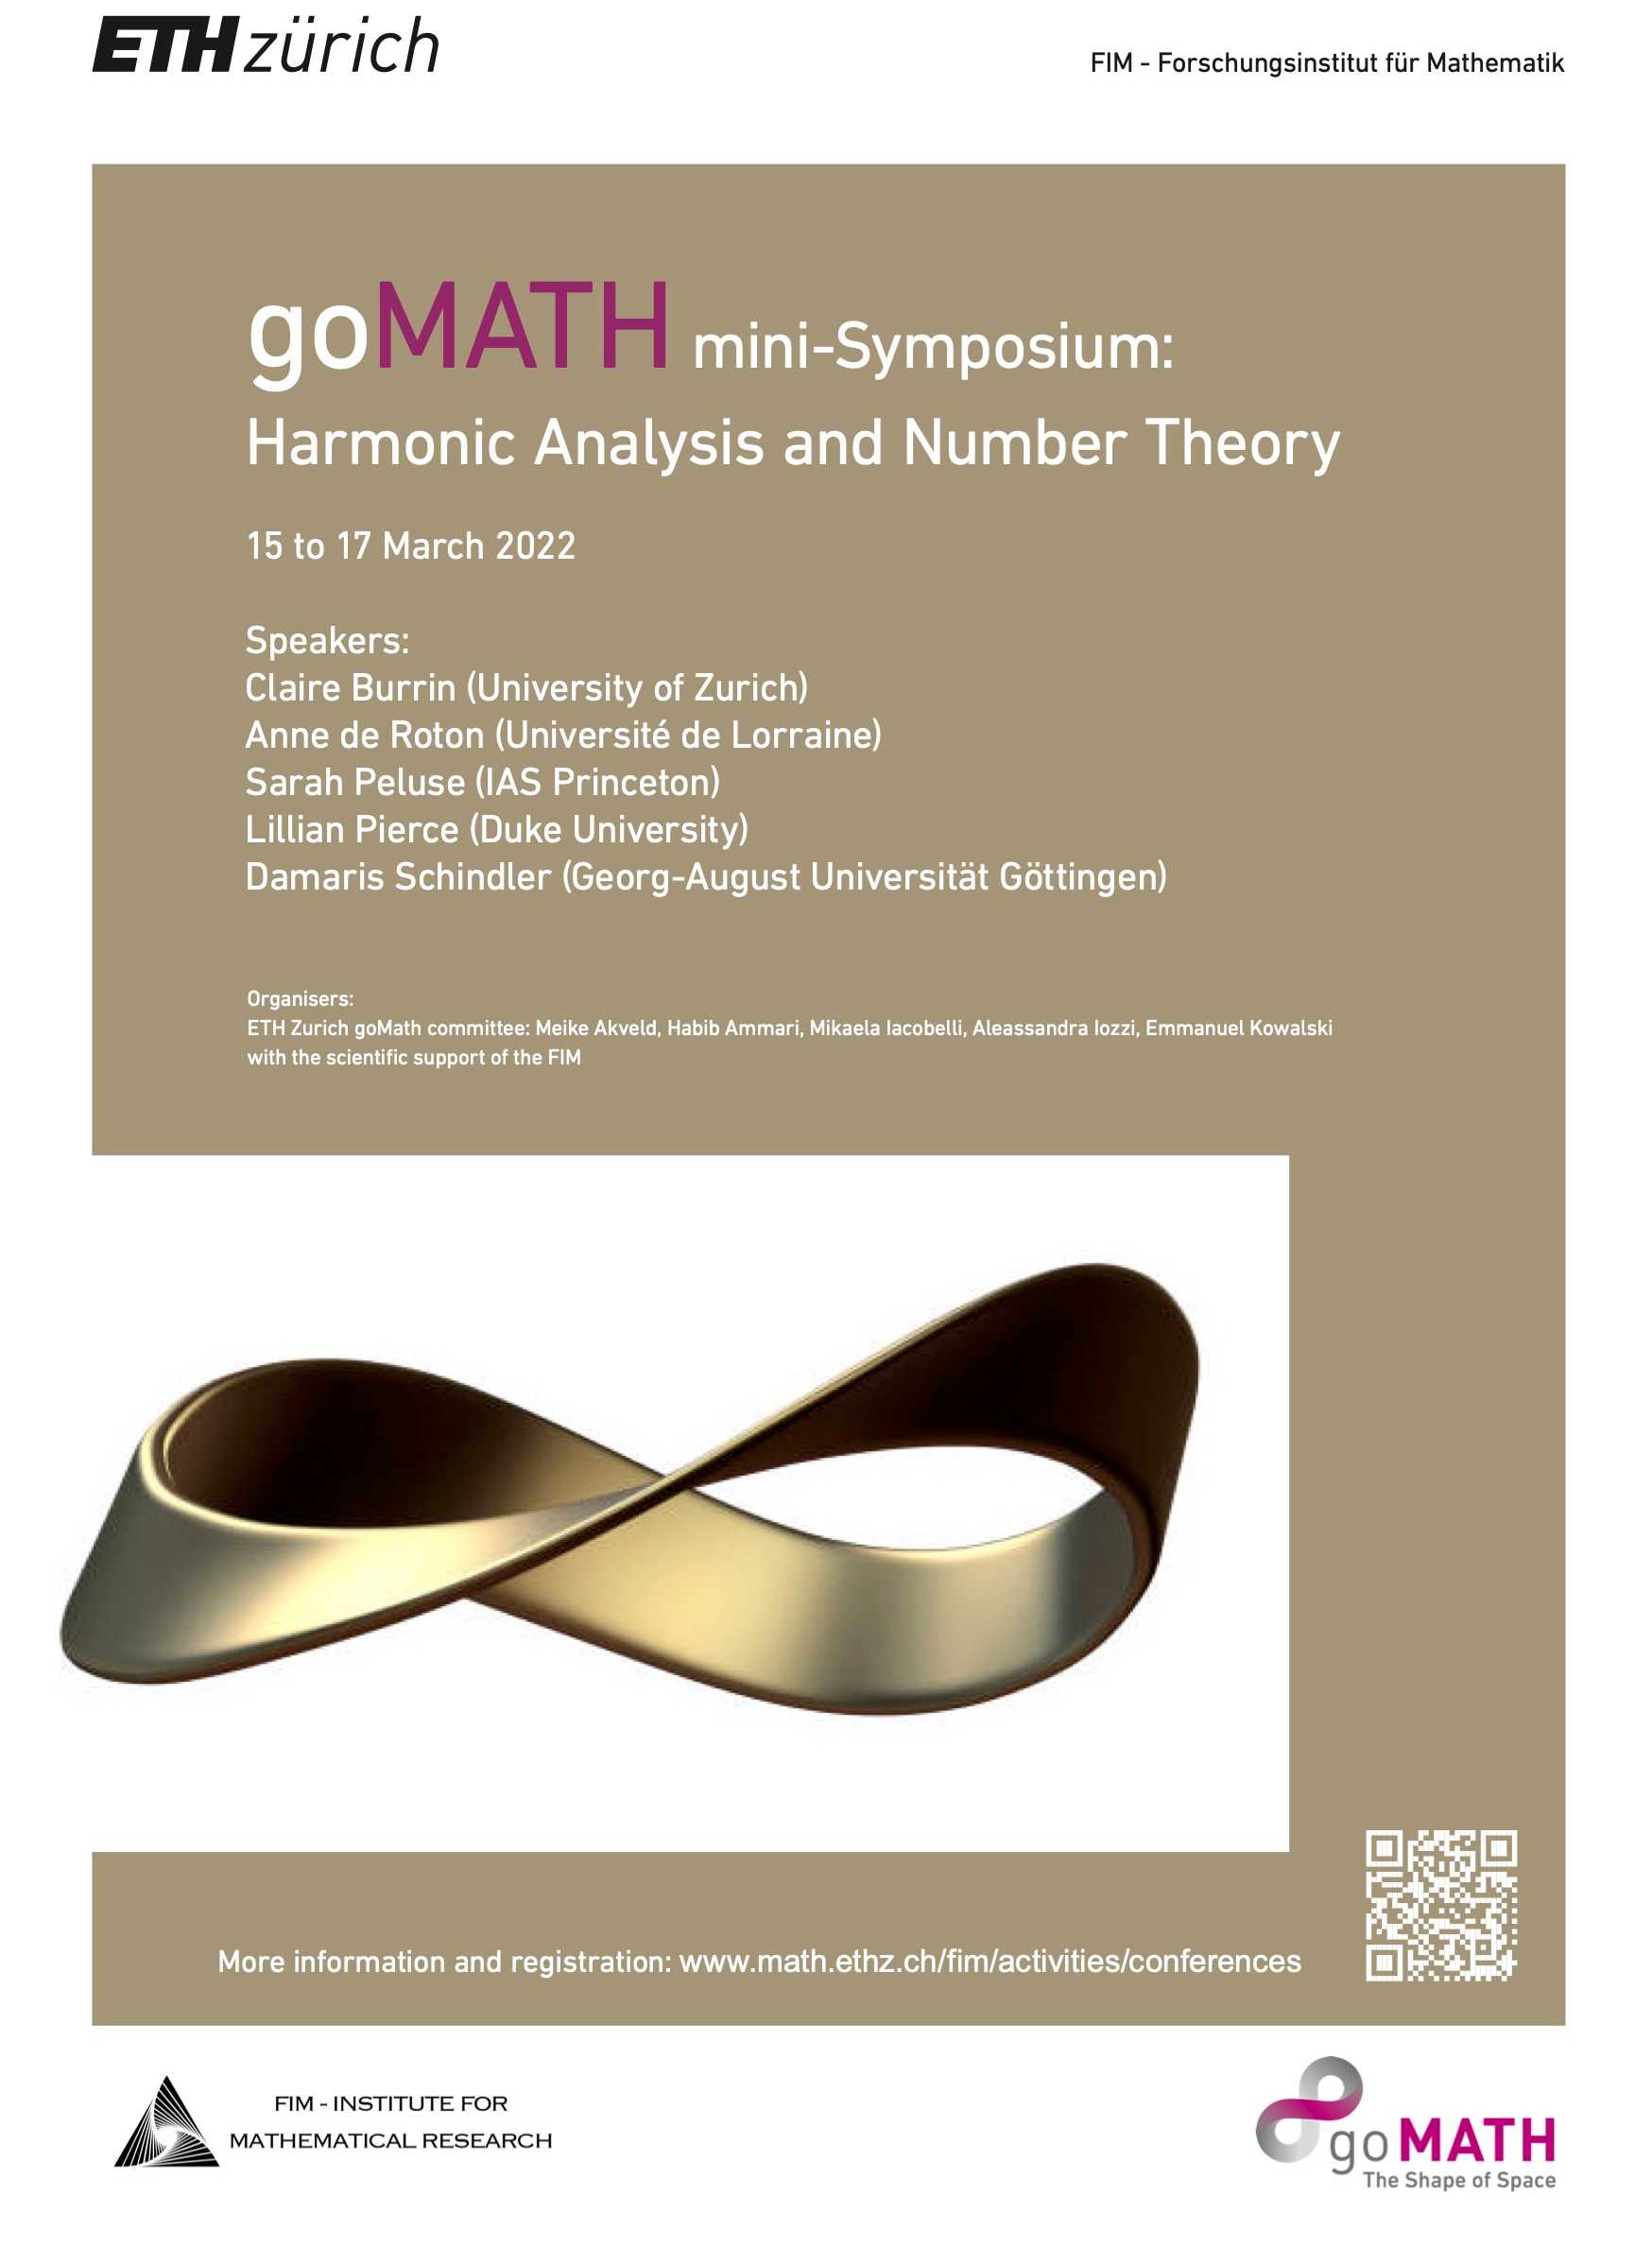 Enlarged view: Poster goMATH mini-symposium